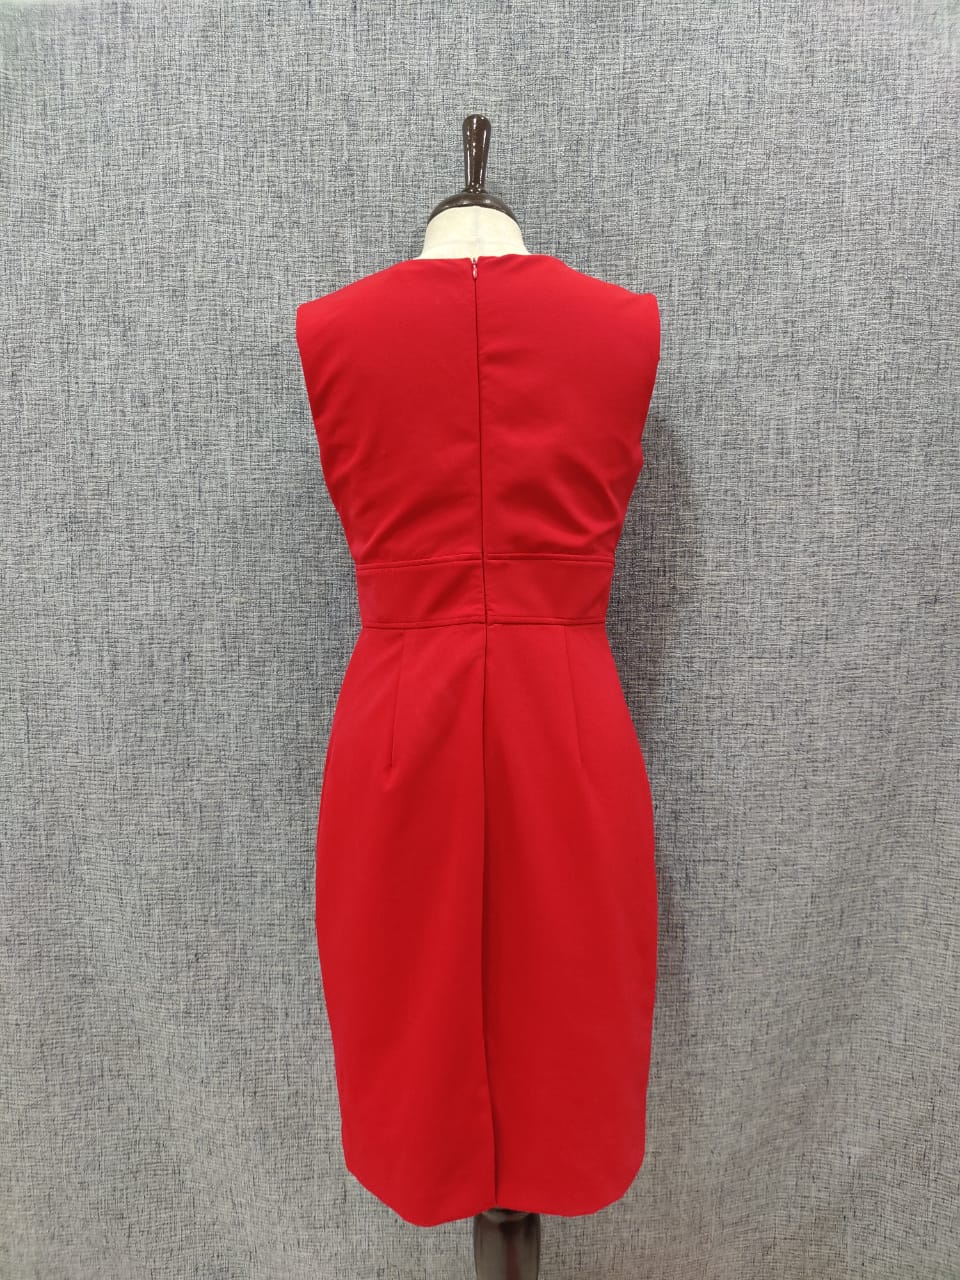 ZARA Red Belted Dress | Relove